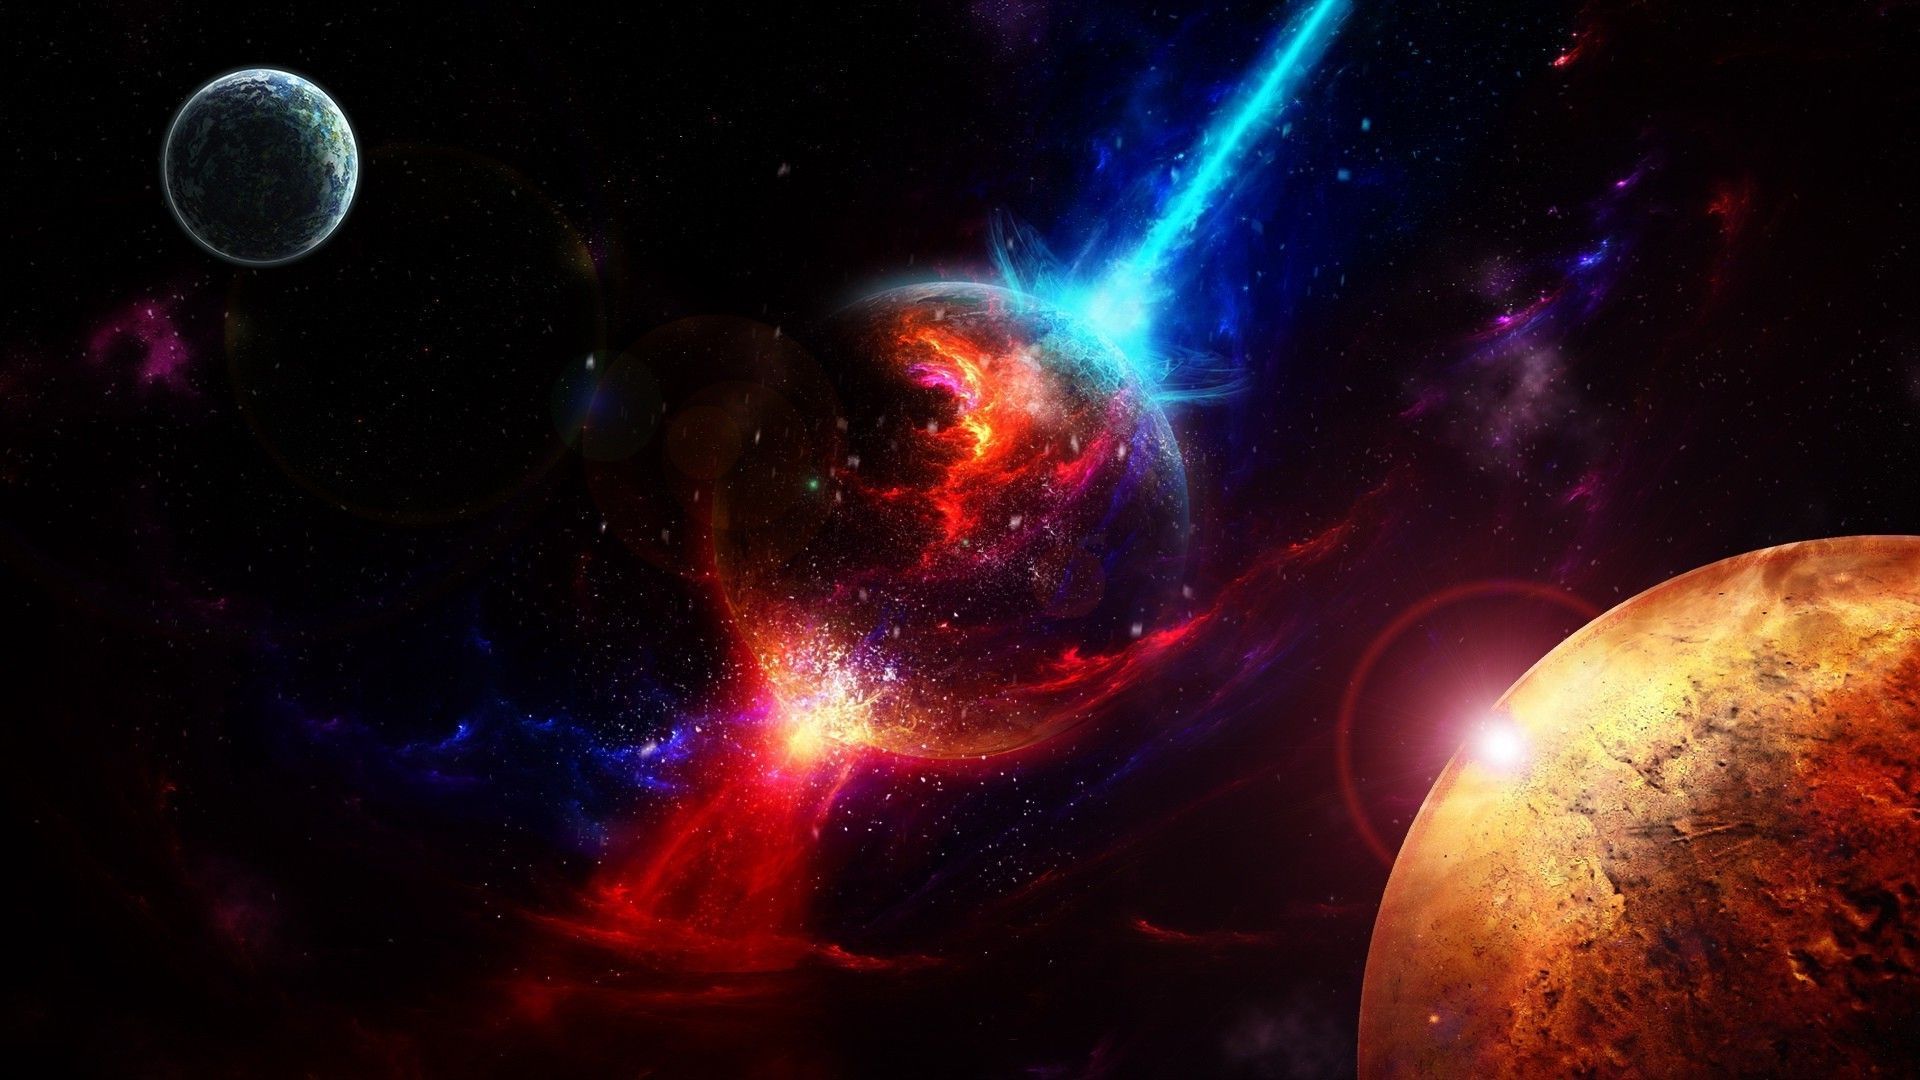 Supernova Explosion Wallpaper - WallpaperSafari | espacio en 2019